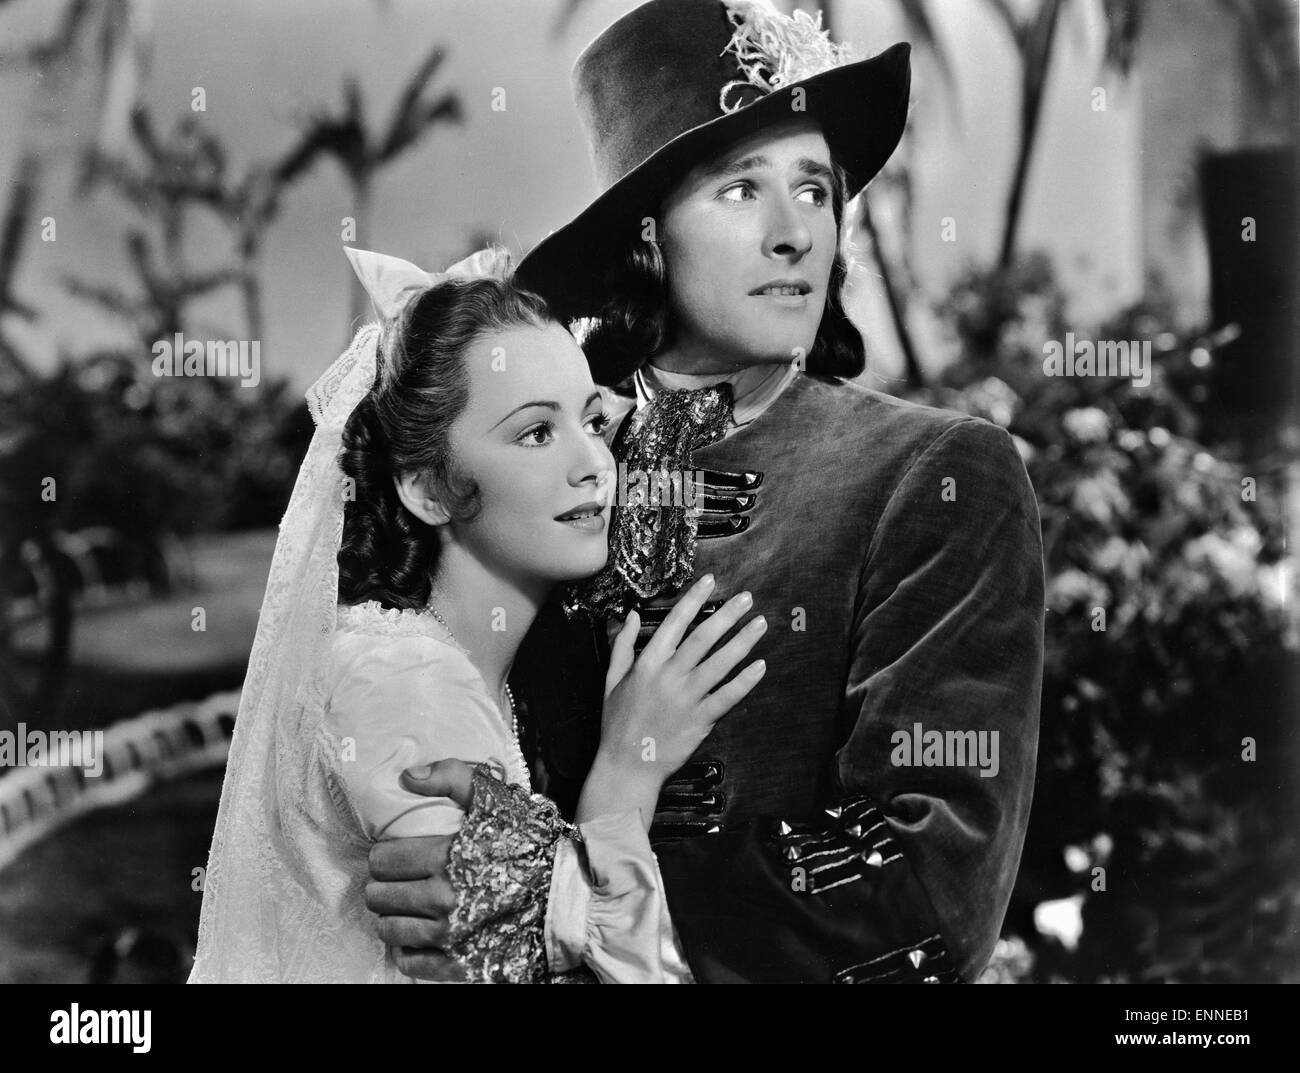 Capitano di sangue, USA 1935, aka: Unter Piratenflagge, Regie: Michael Curtiz, Darsteller: Errol Flynn, Olivia de Havilland Foto Stock